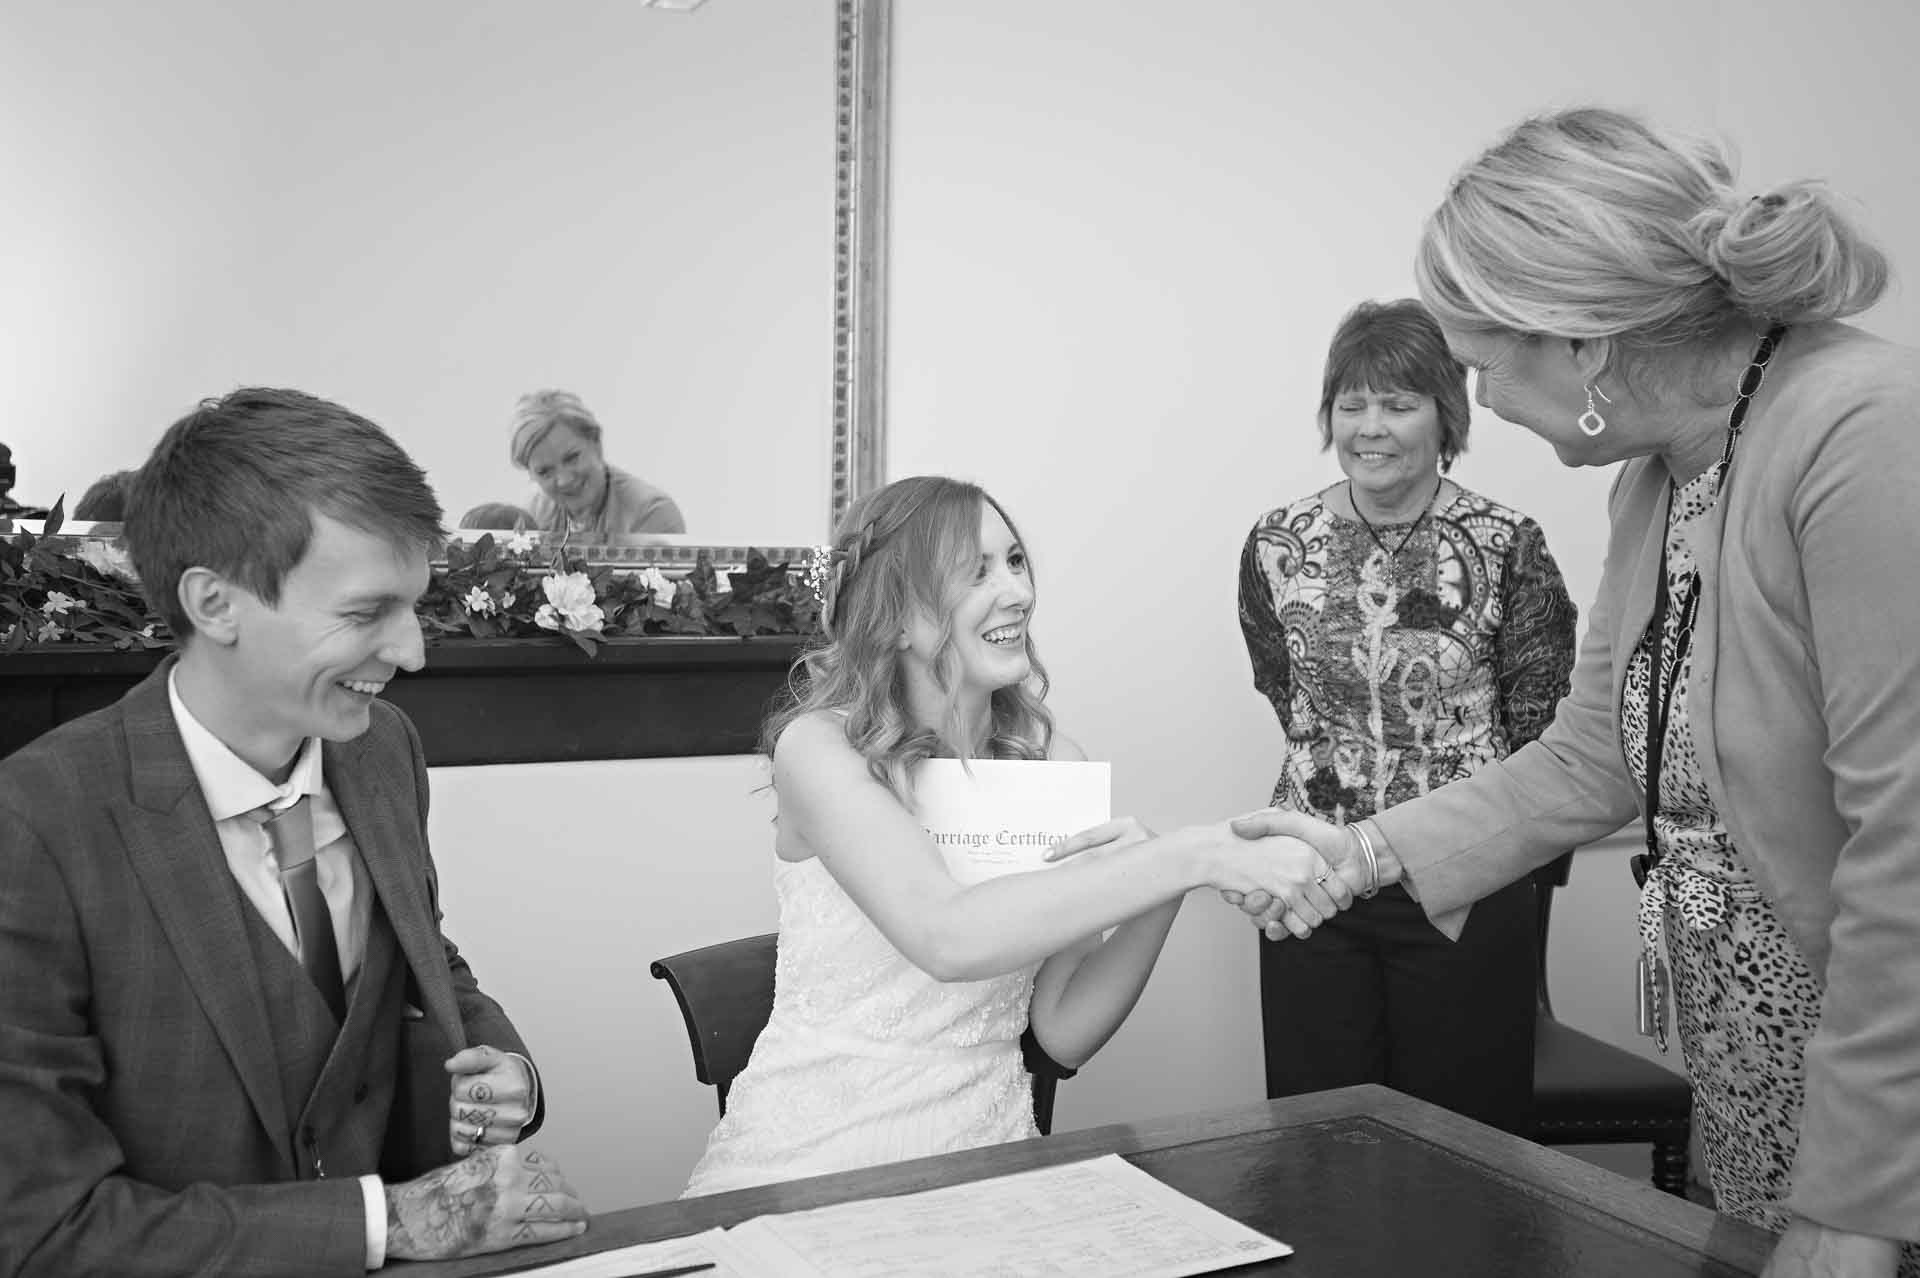 Bride shaking registrars hand after wedding ceremony